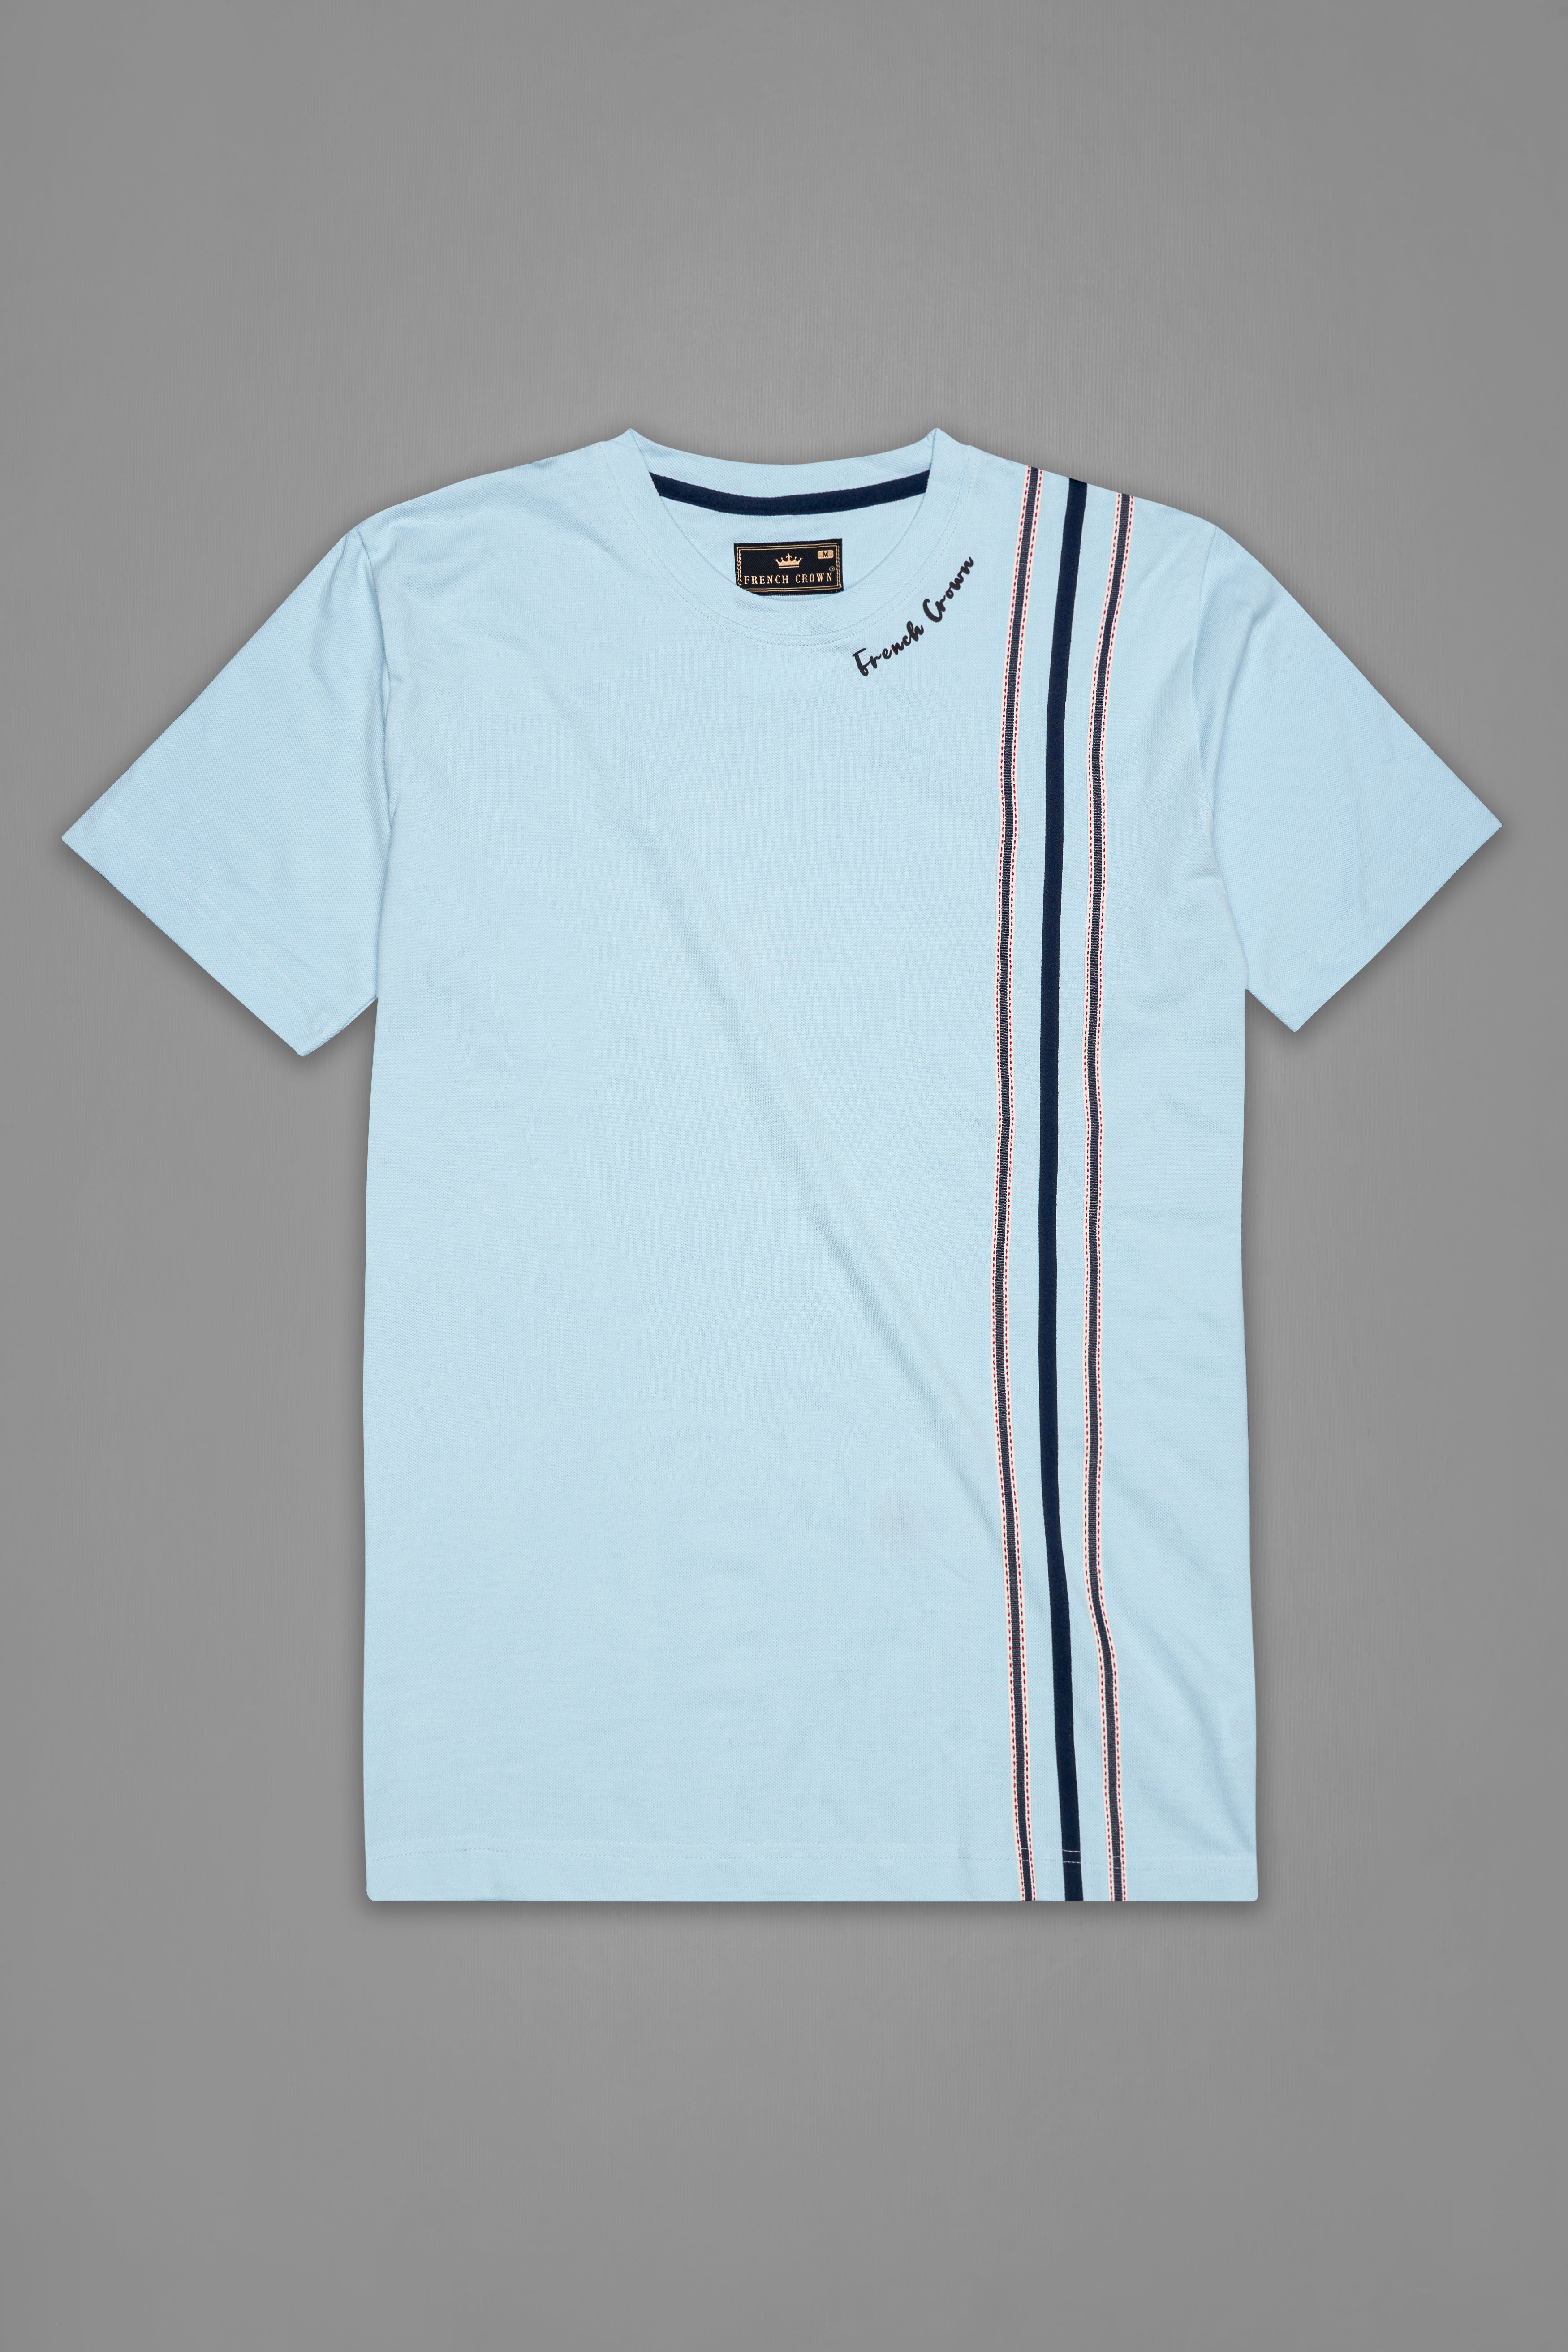 Ziggurat Blue Striped Premium Cotton Pique T-Shirt TS908-S, TS908-M, TS908-L, TS908-XL, TS908-XXL